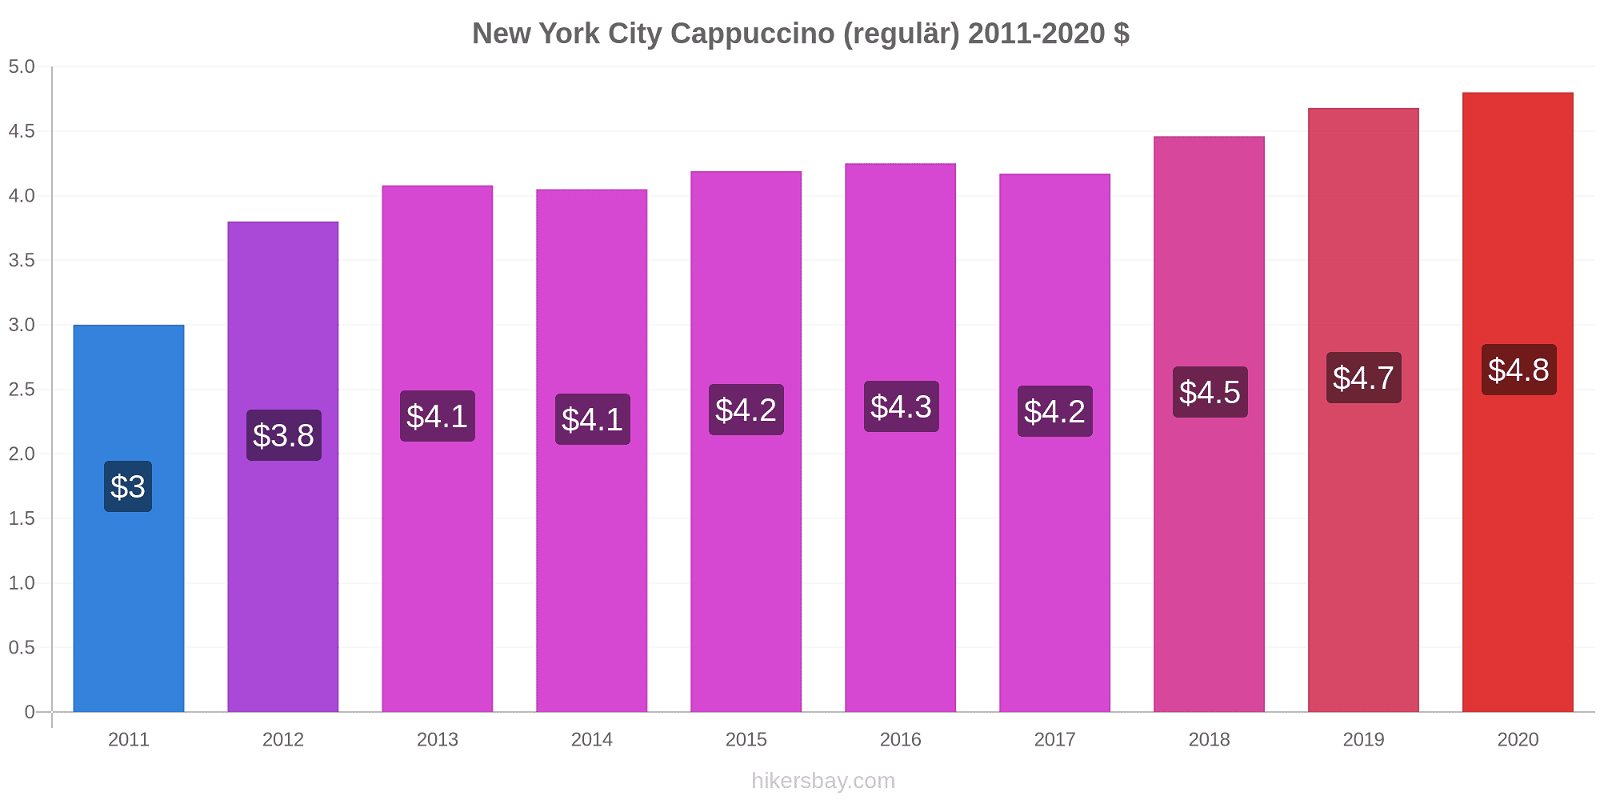 New York City Preisänderungen Cappuccino (regulär) hikersbay.com